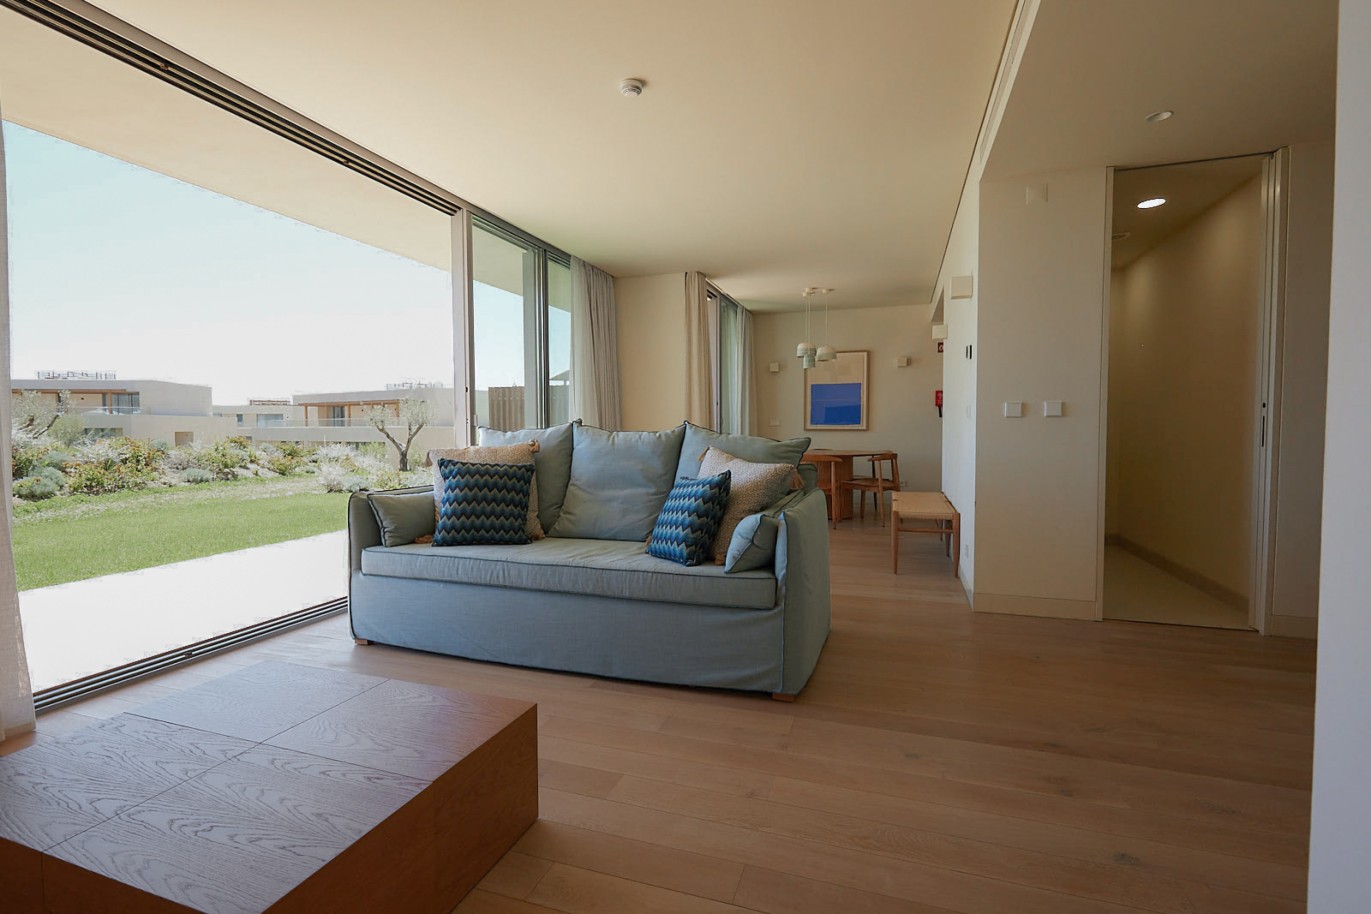 3 bedroom apartment in resort, for sale in Porches, Algarve_228599